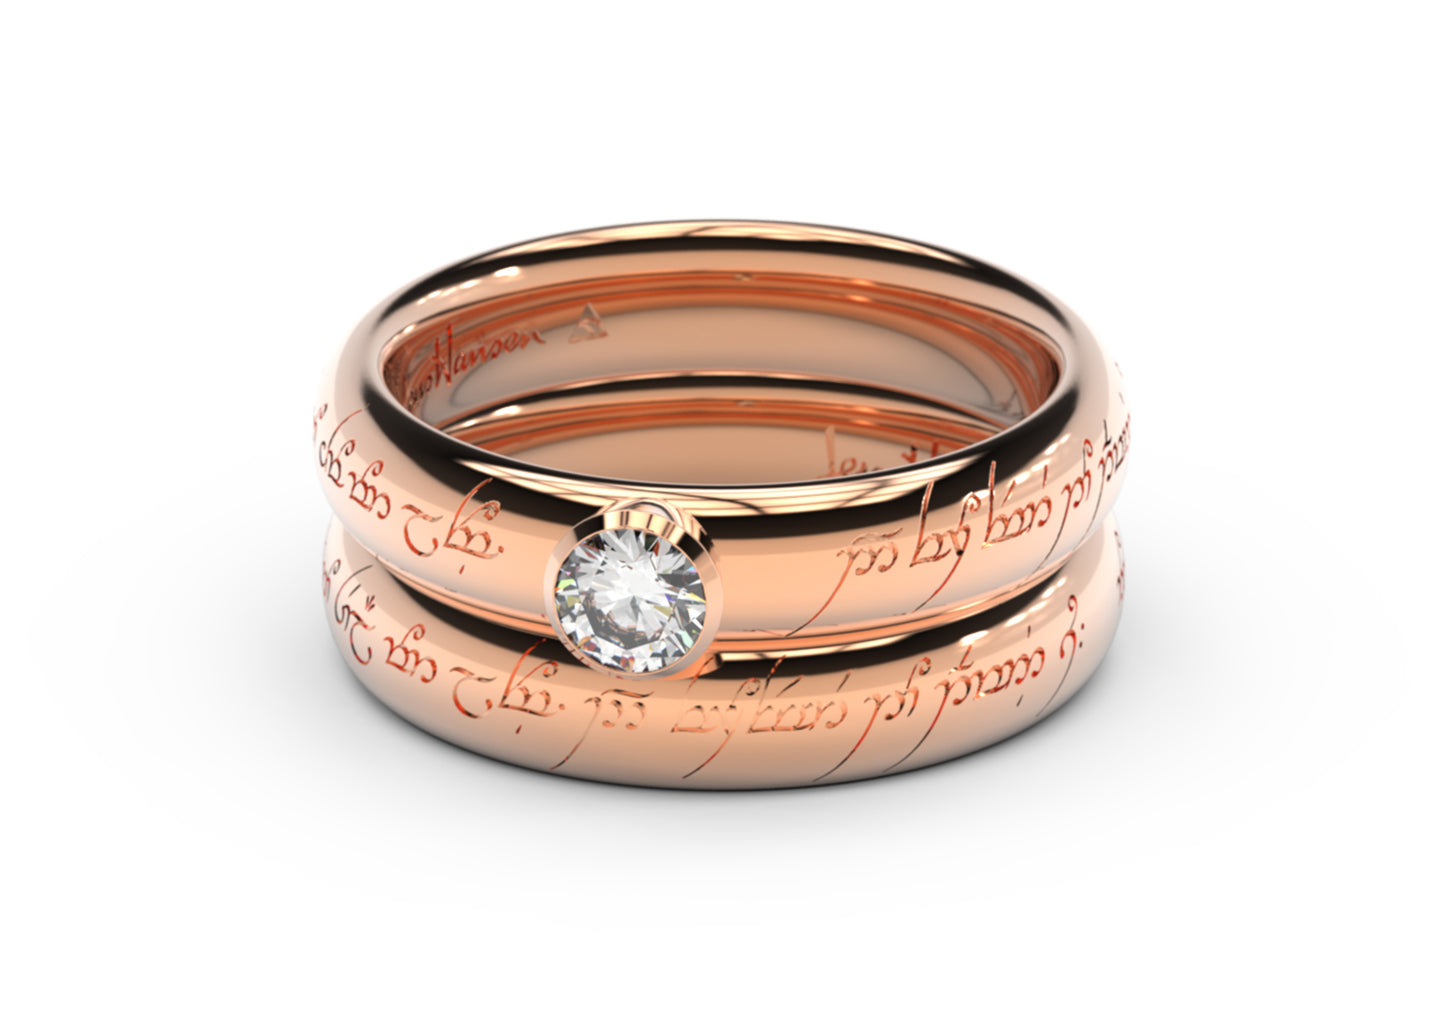 Elegant Elvish Engagement Ring, Red Gold